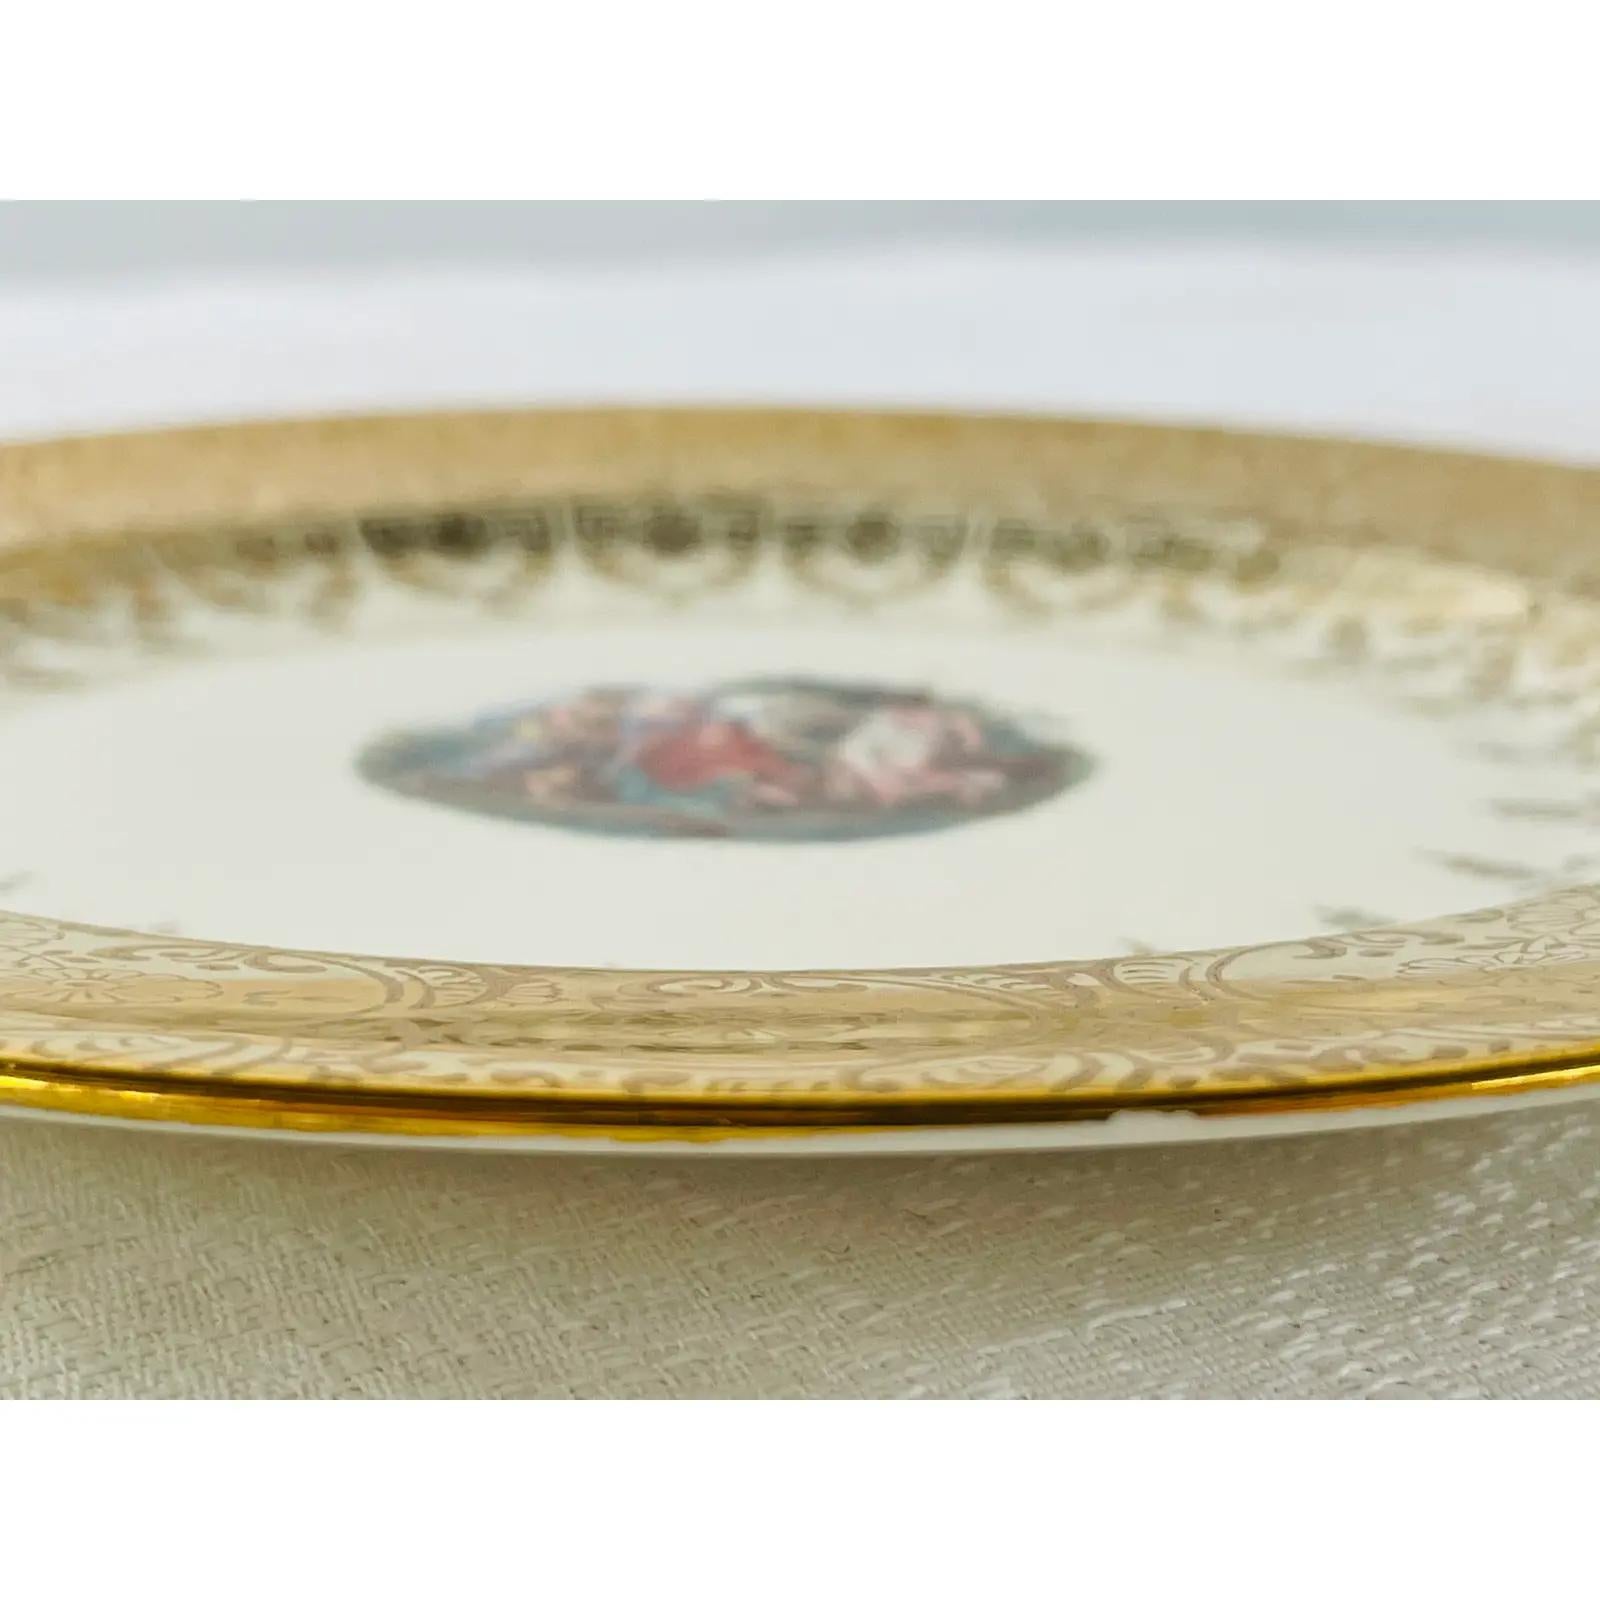 Federal Style Sabin Crest -O- Gold Warranted 22K Gold Dinner Plate, Set of 6 For Sale 2